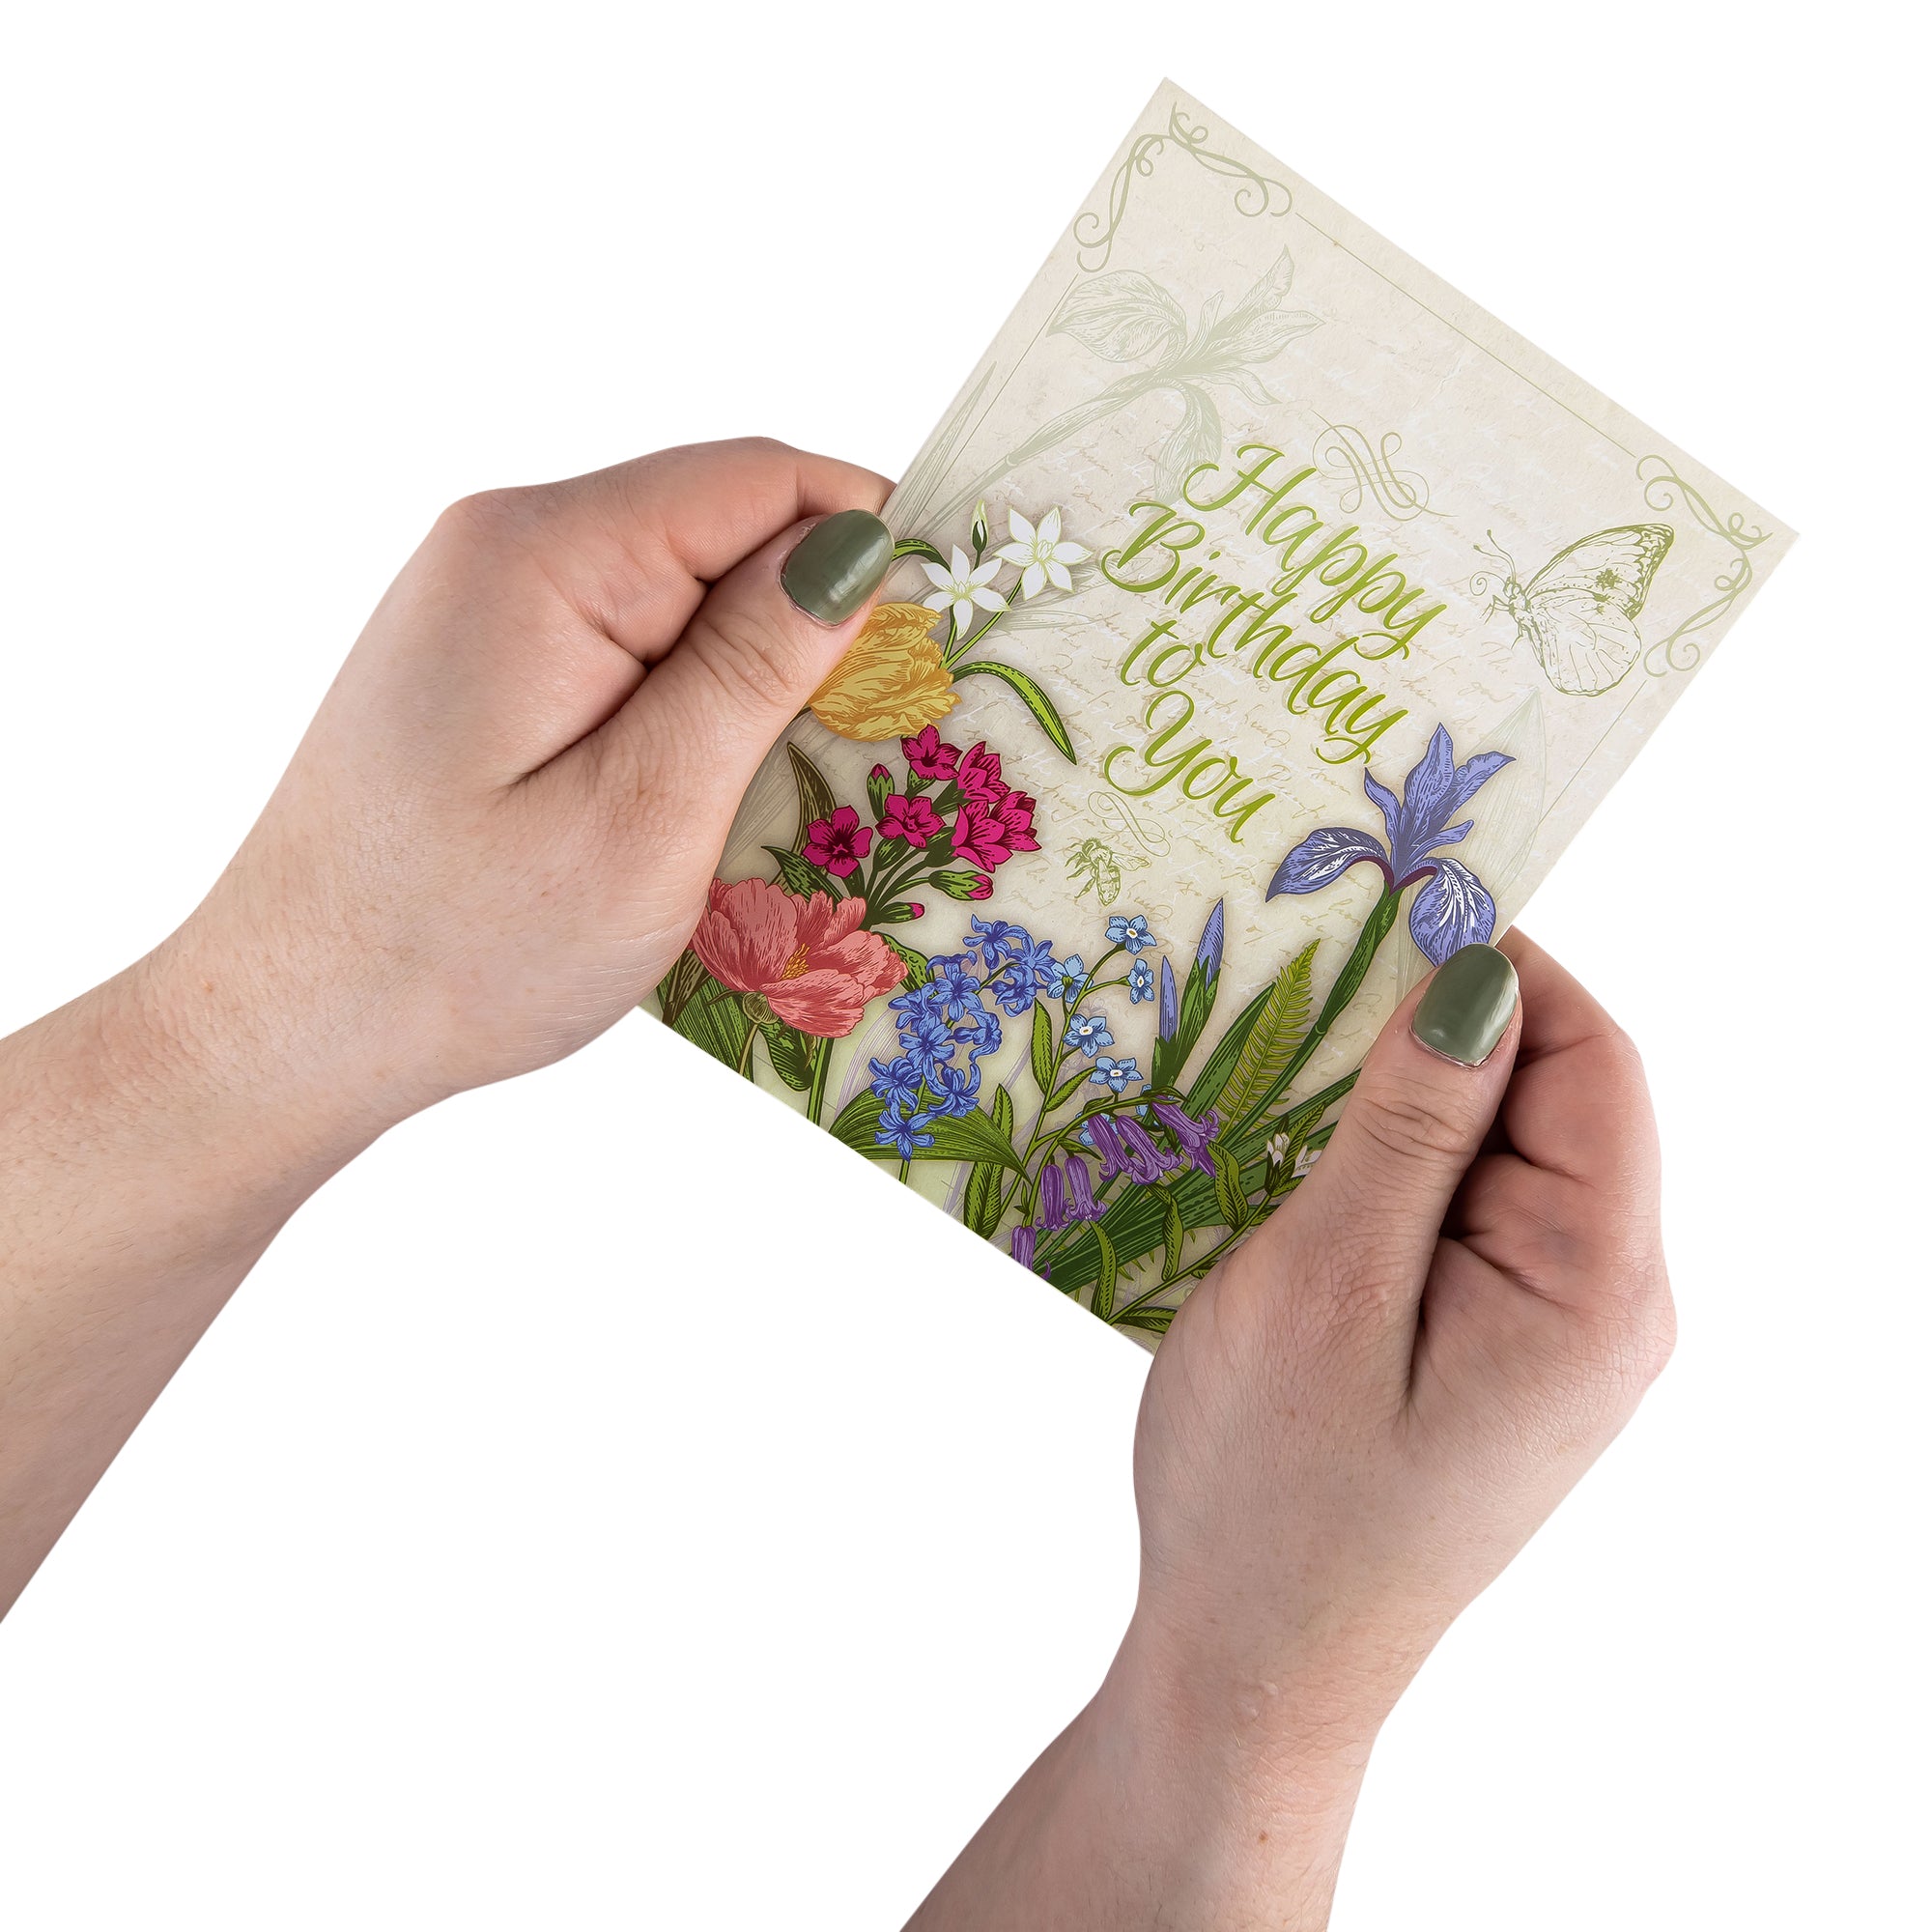 Single Cards - Birthday - Floral Philippians 4:6 (6 pk)